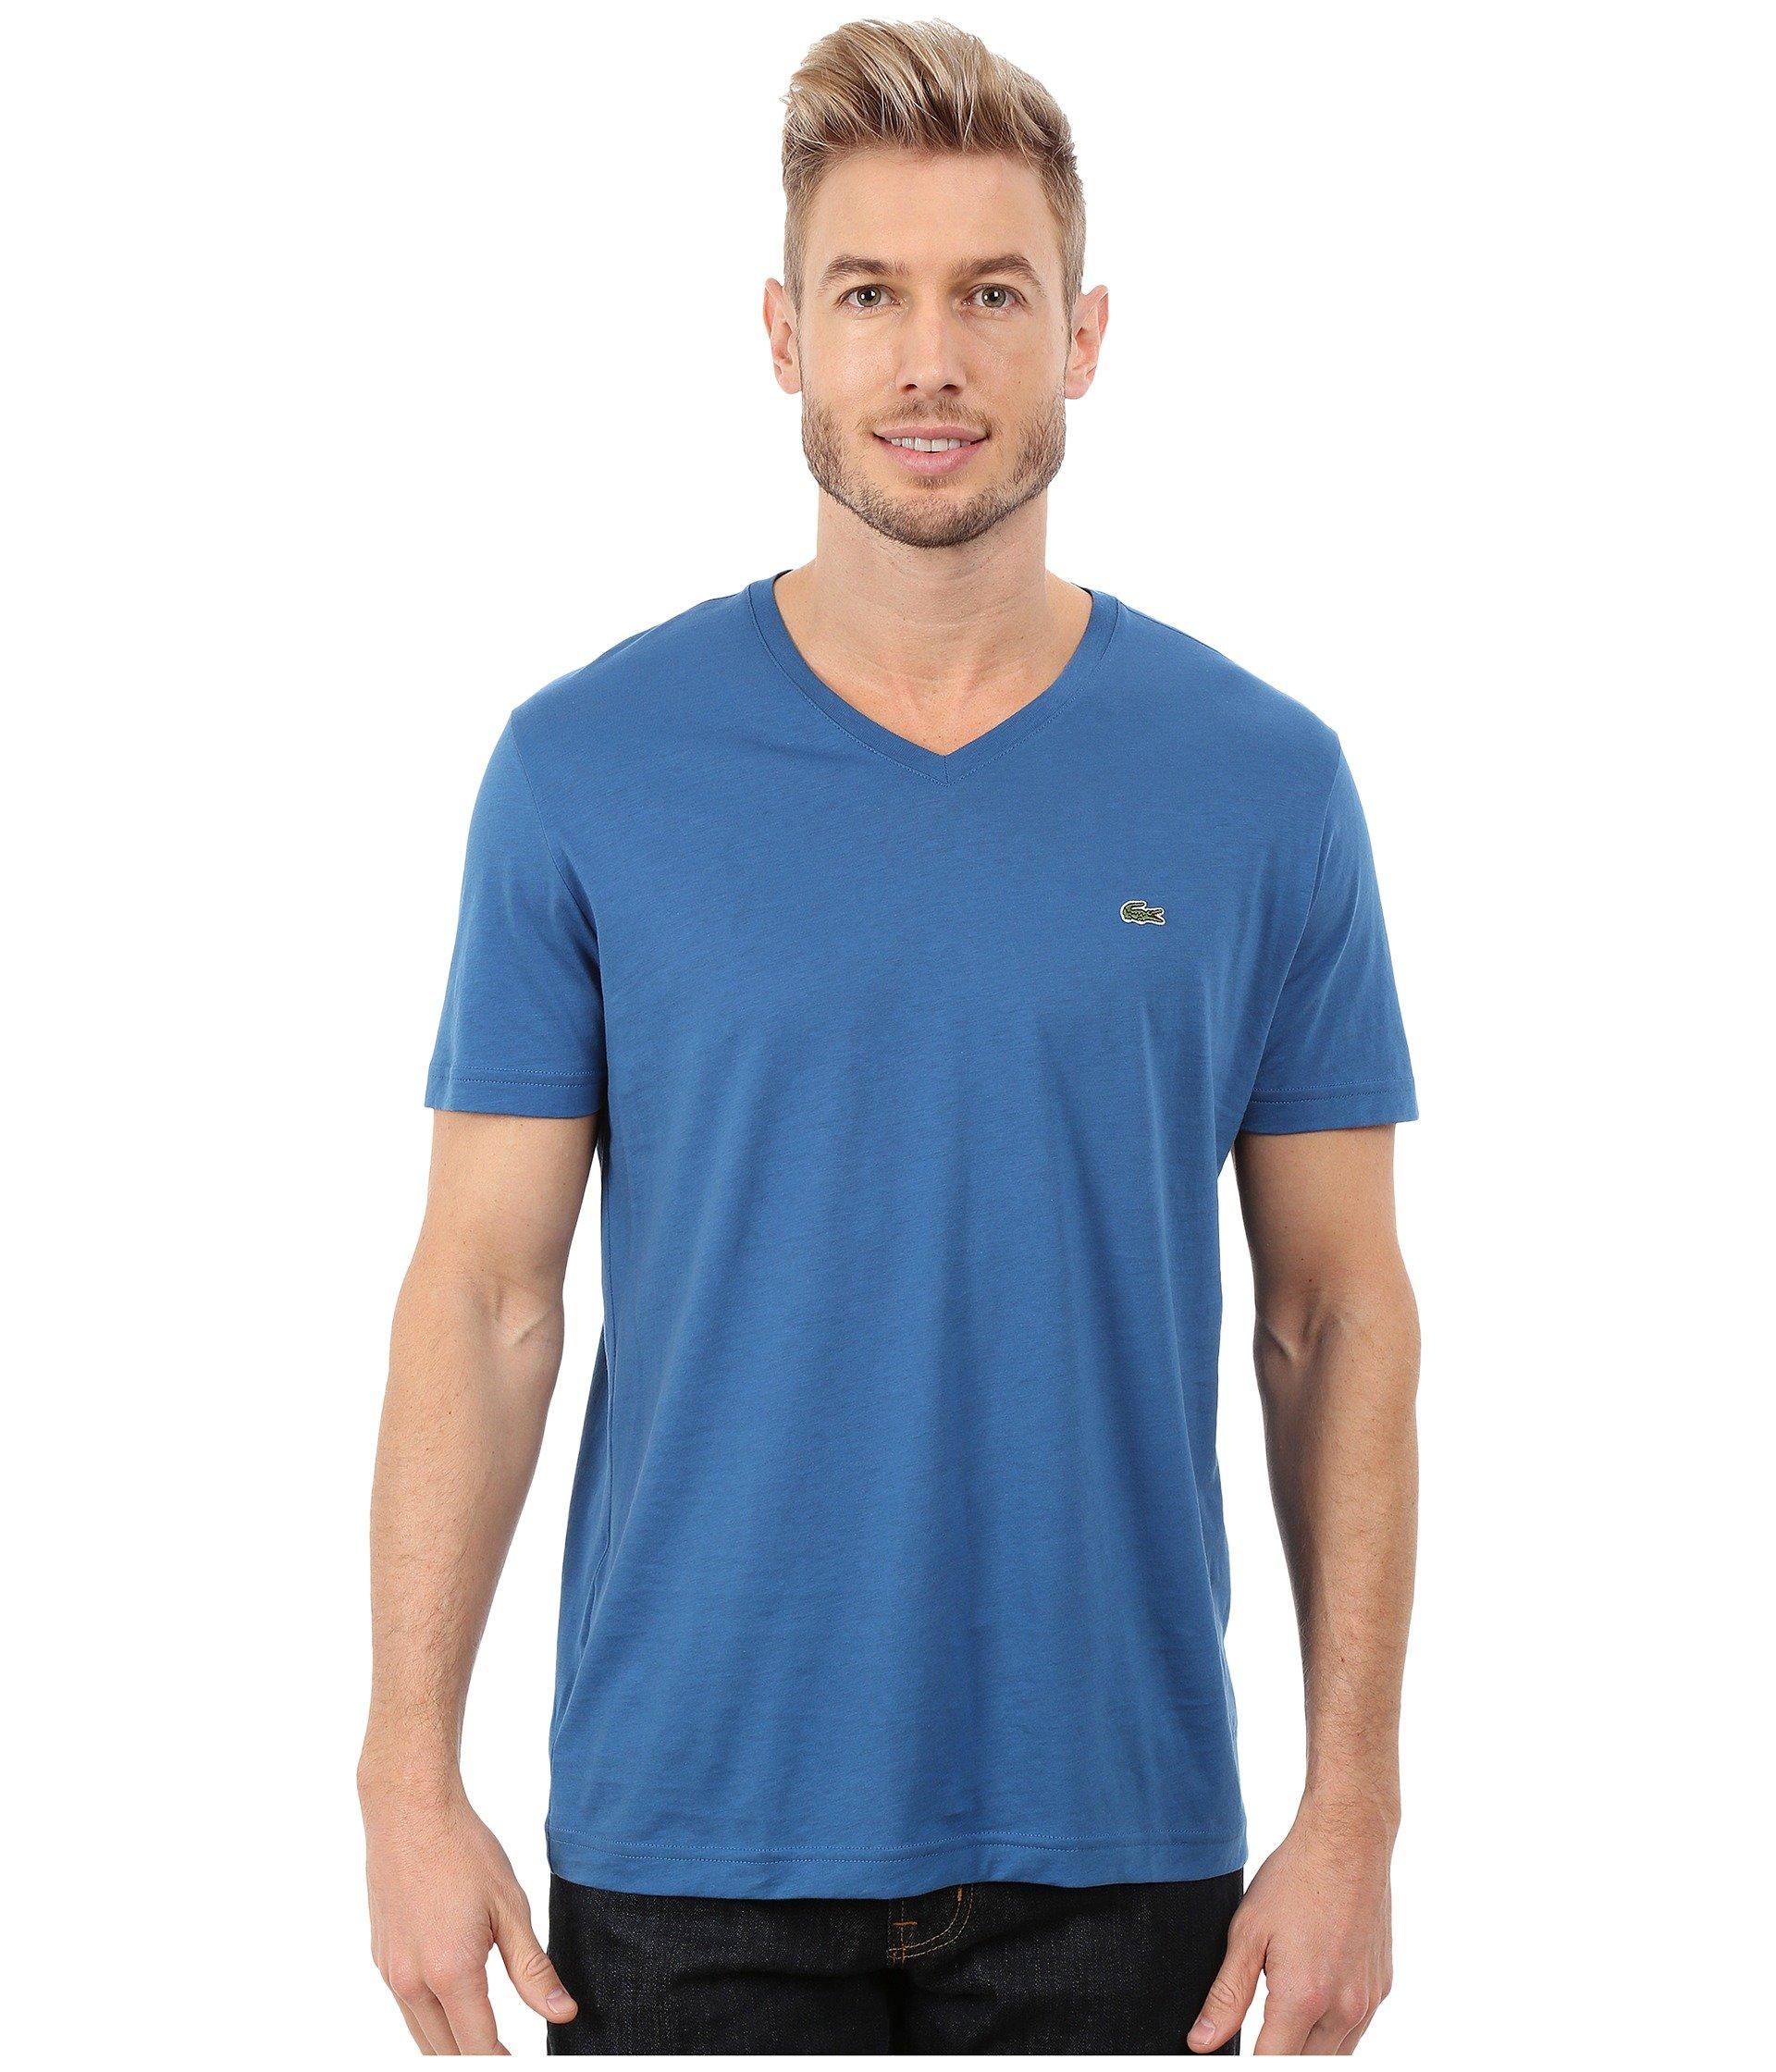 Lacoste Short Sleeve Jersey Pima V Neck T-shirt in Blue for Men - Lyst